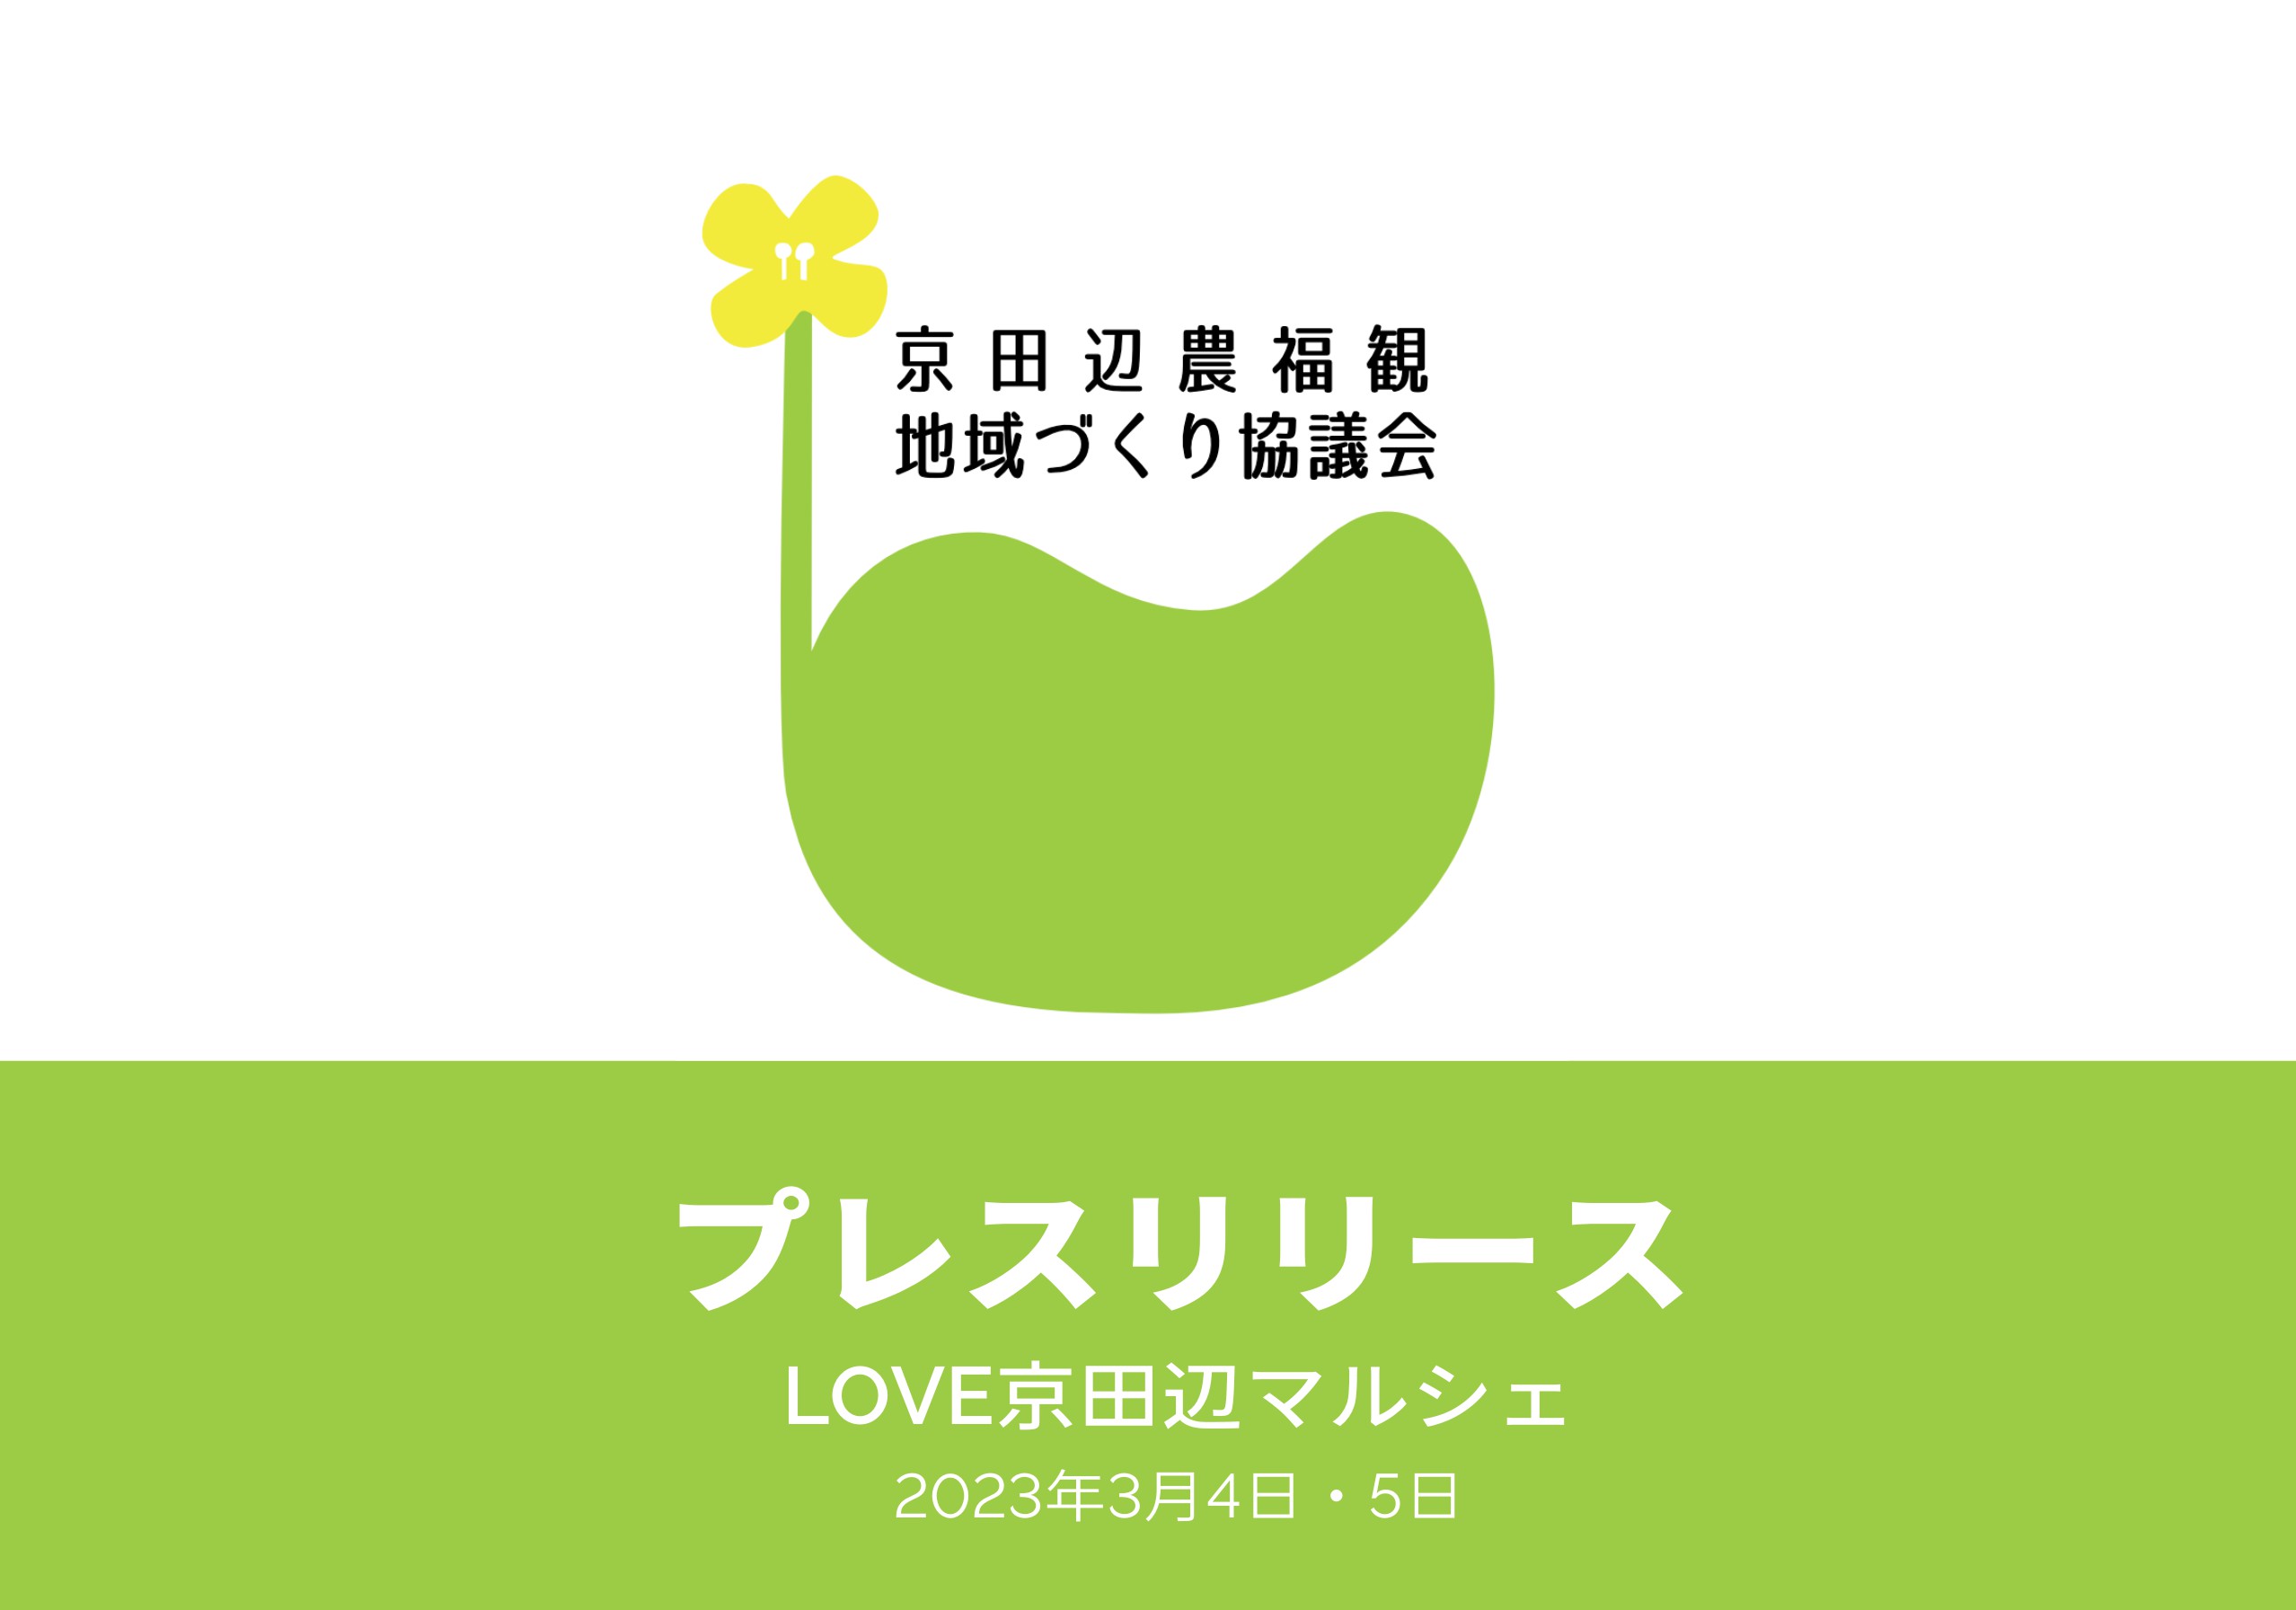 LOVE京田辺マルシェのメディア様向けのプレスリリースの画像